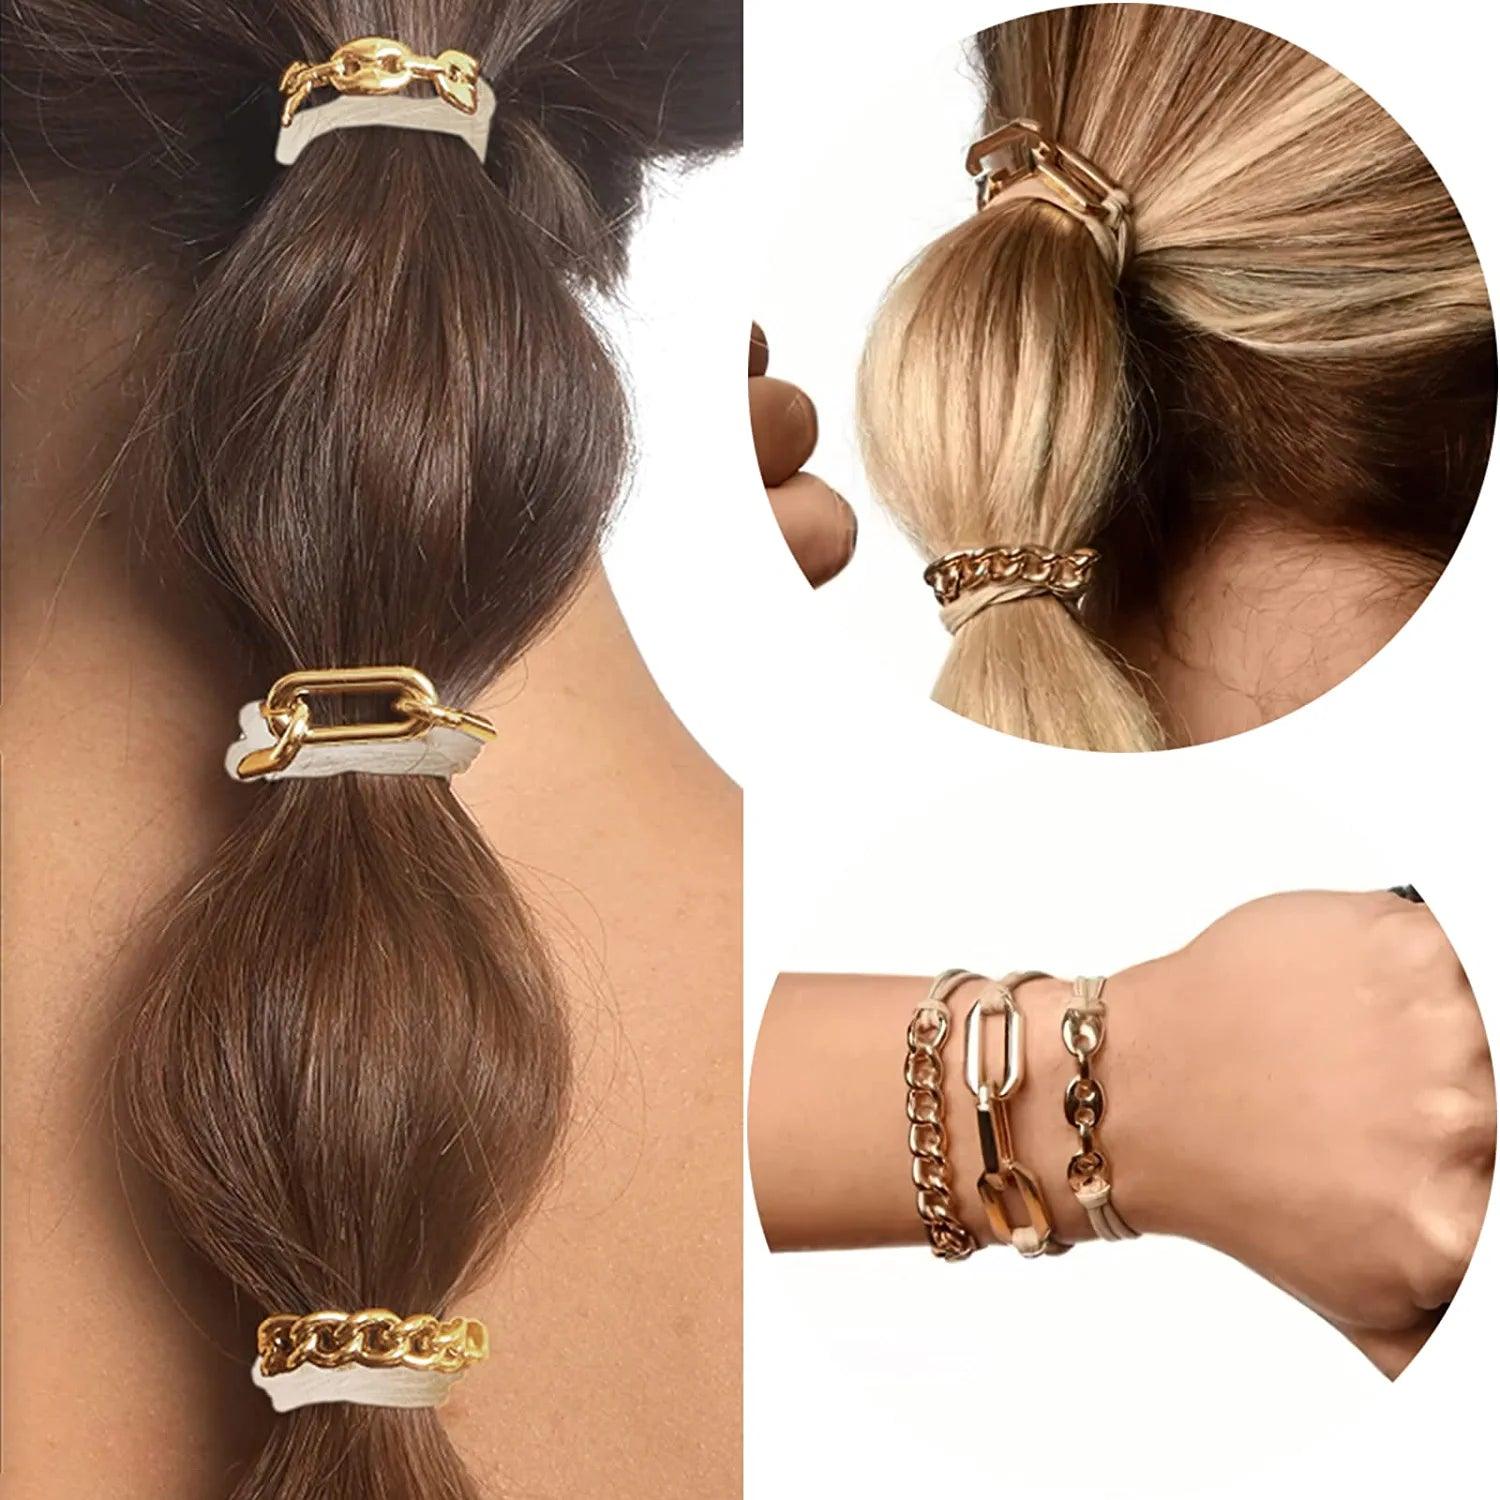 Bracelet Hair Ties(3PCS/Set)